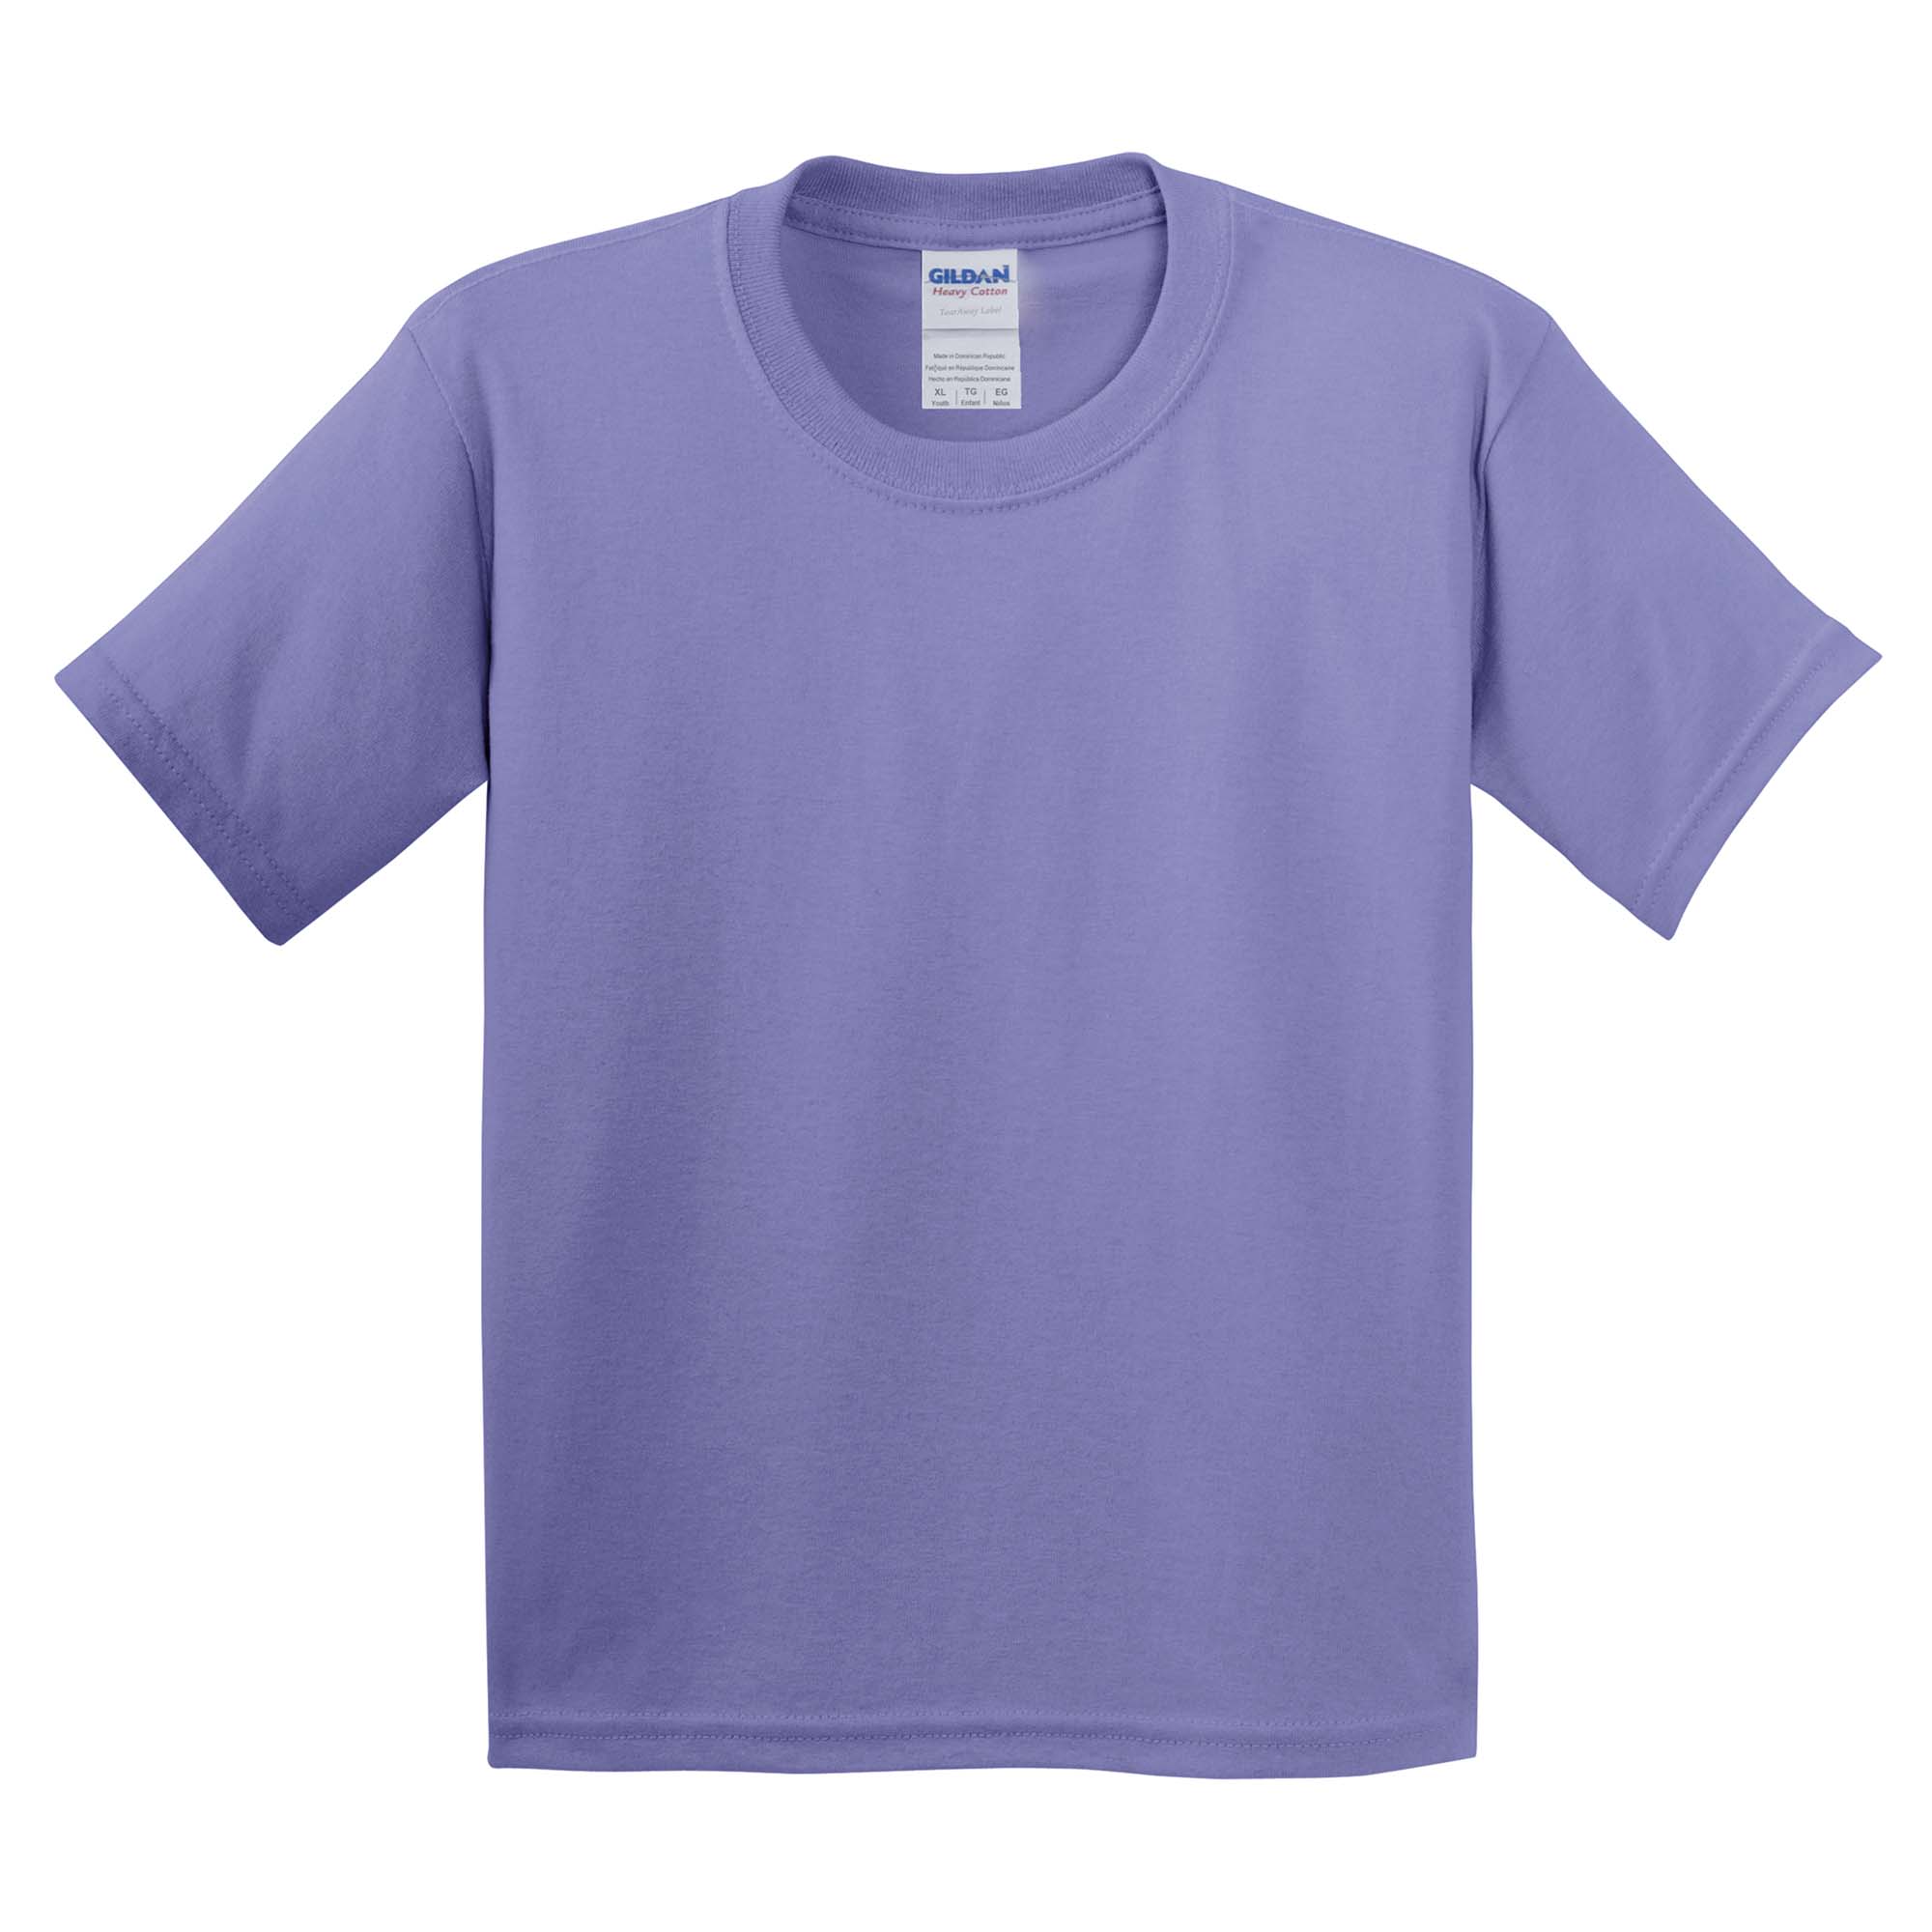 Danya Creation Fishy Fish, Printed Cotton Tshirt (Purple) for Boys(3y-4y)